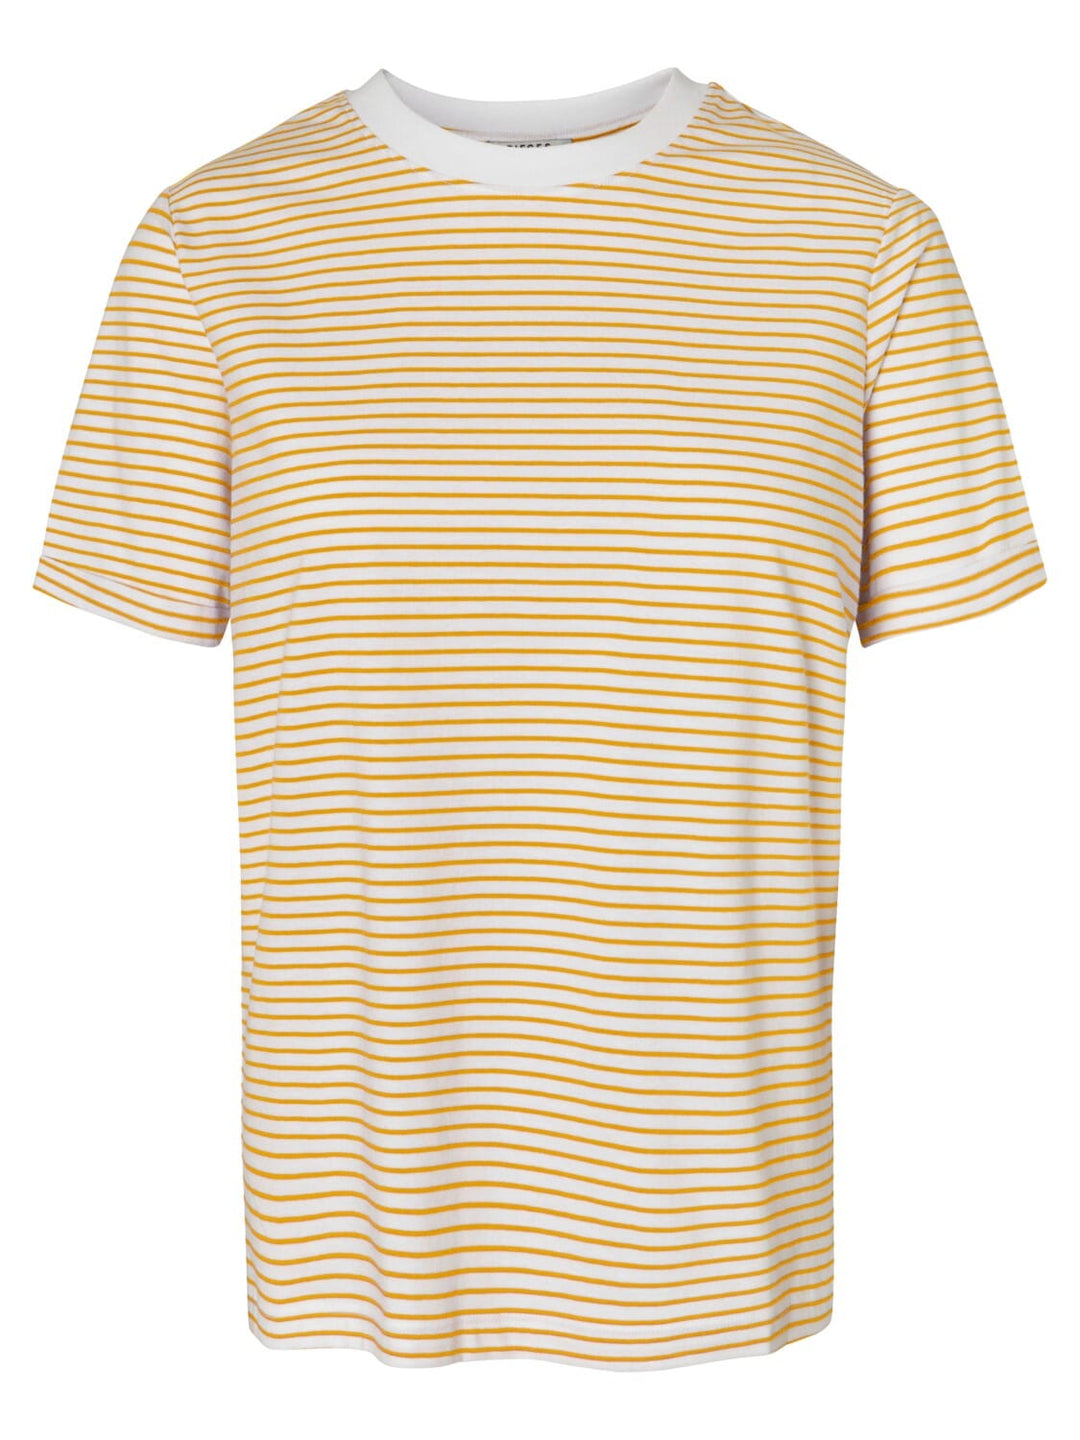 Pieces - Pcria Ss Fold Up Tee Stripes Bc - Bright White Stripes:Flax T-shirts 